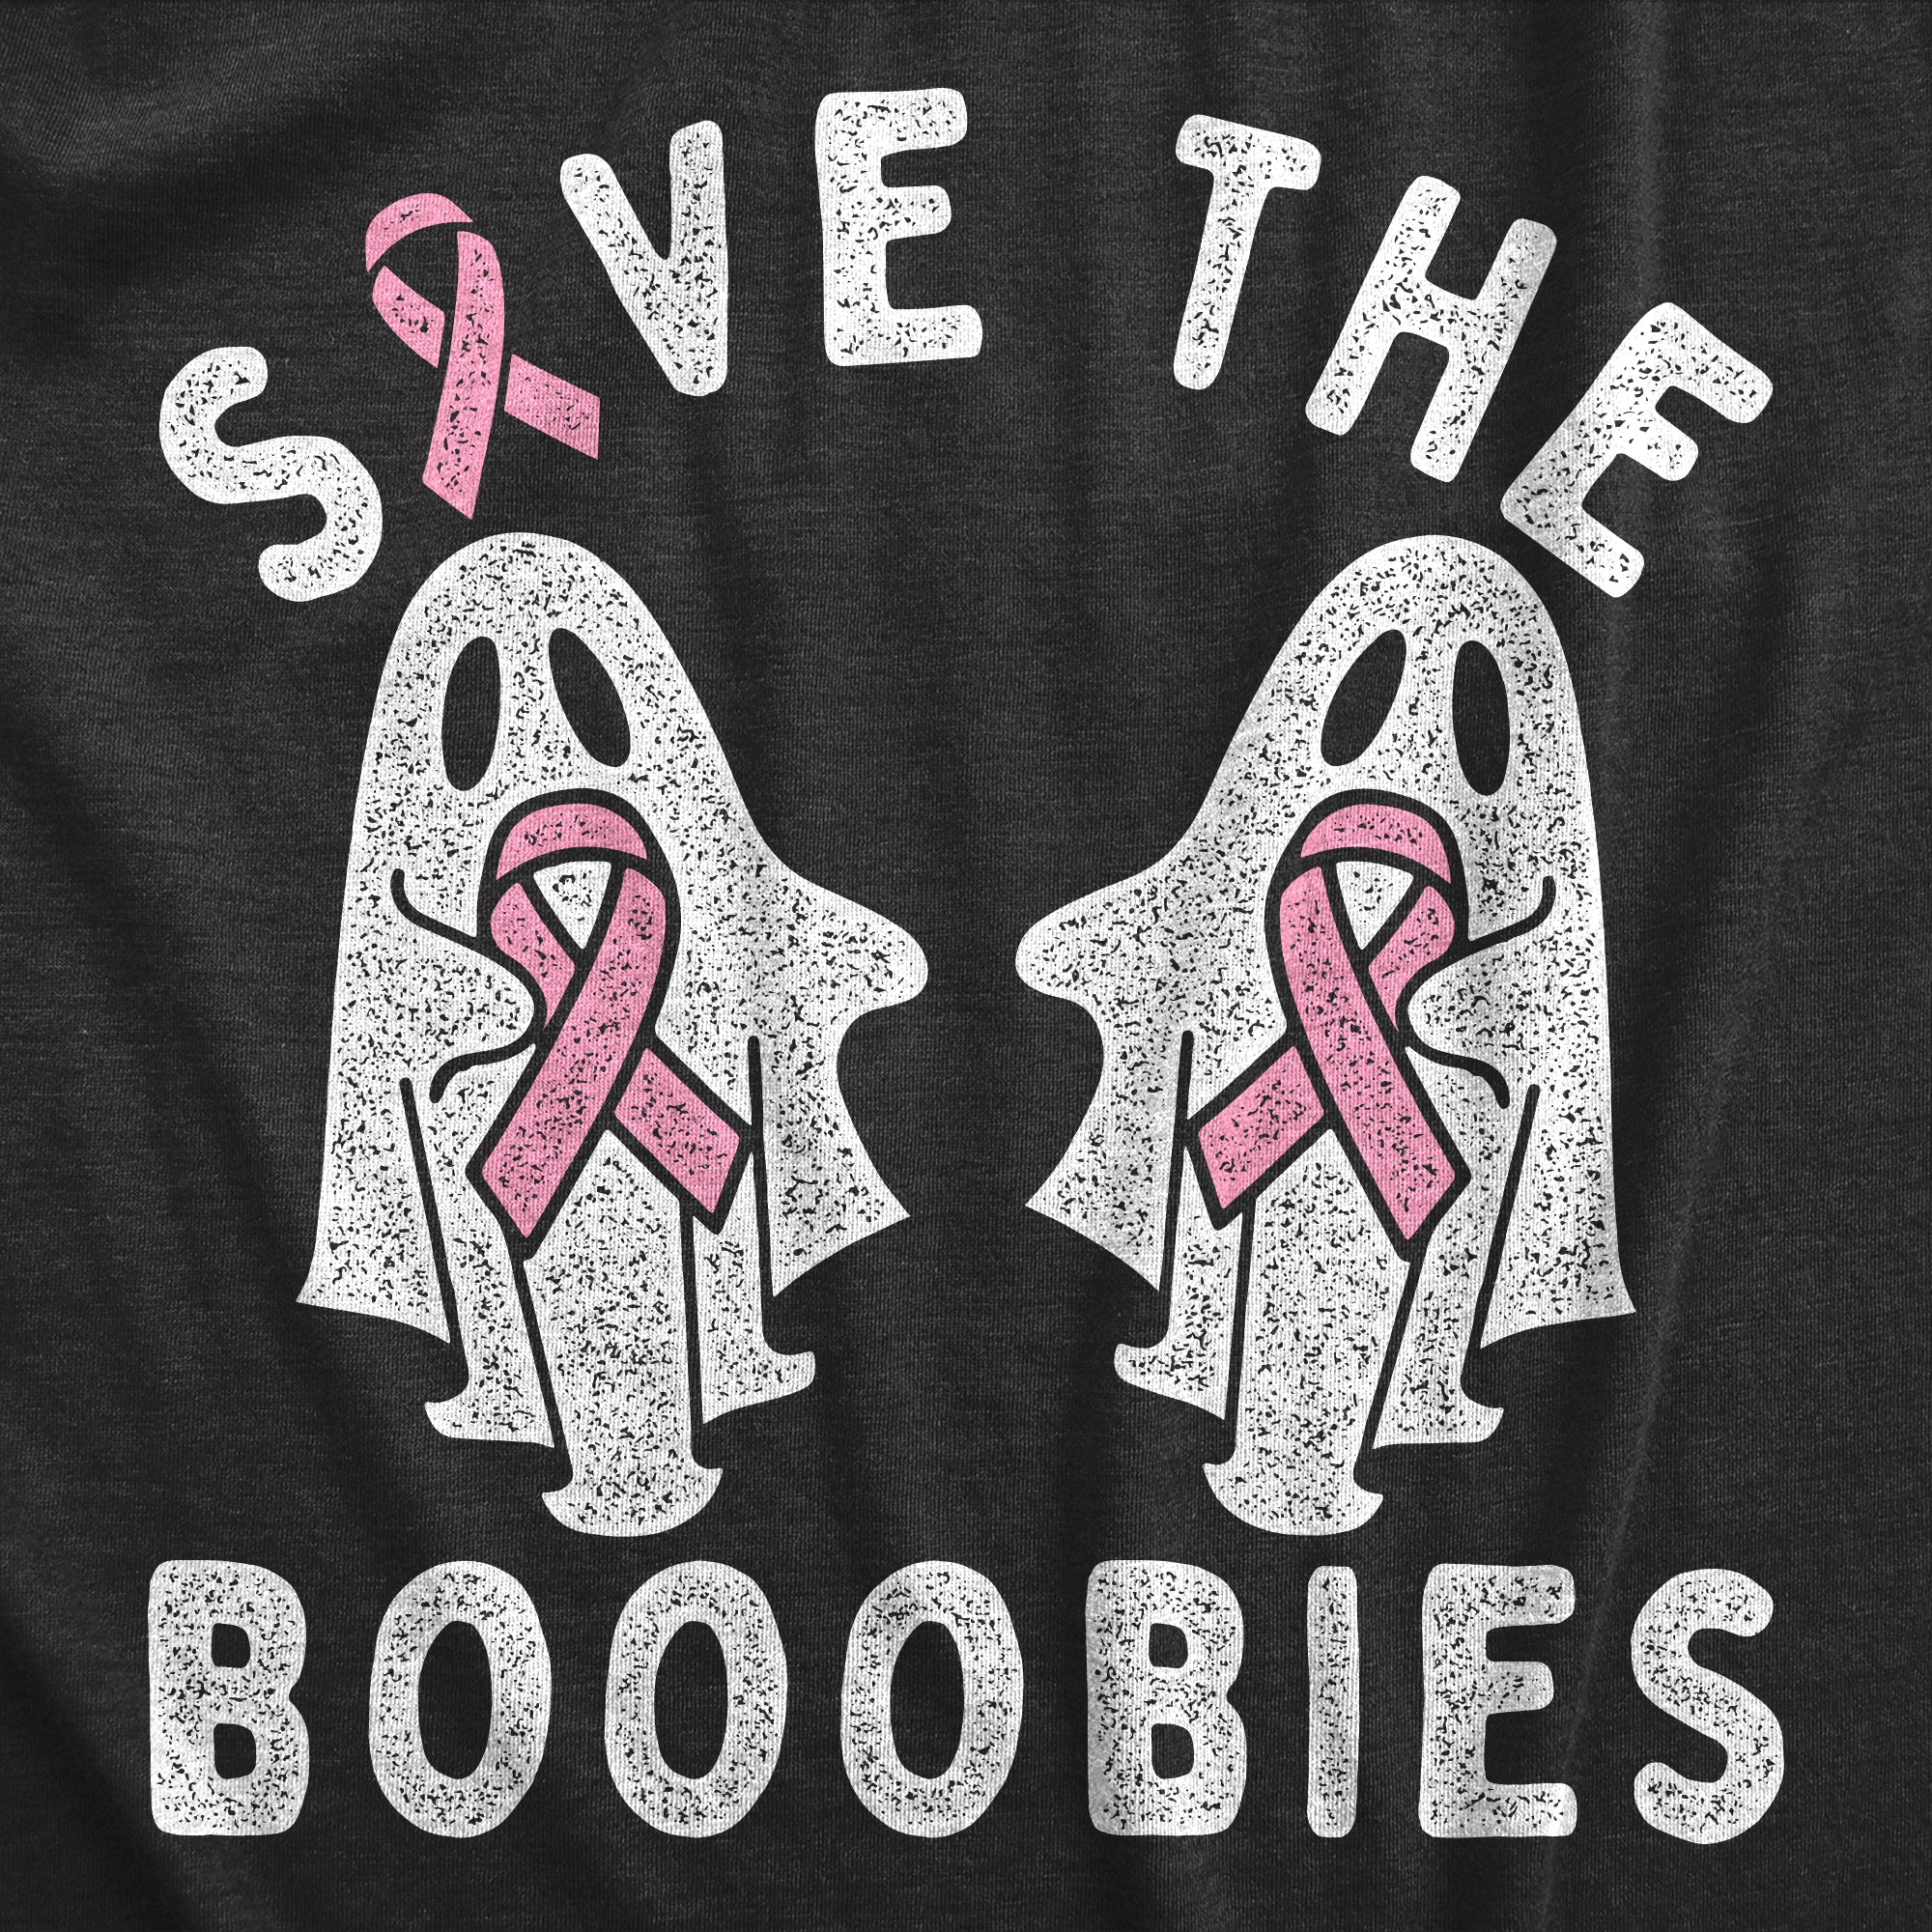 Funny Heather Black - BOOOBIES Save The Booobies Womens T Shirt Nerdy Halloween motivational Tee